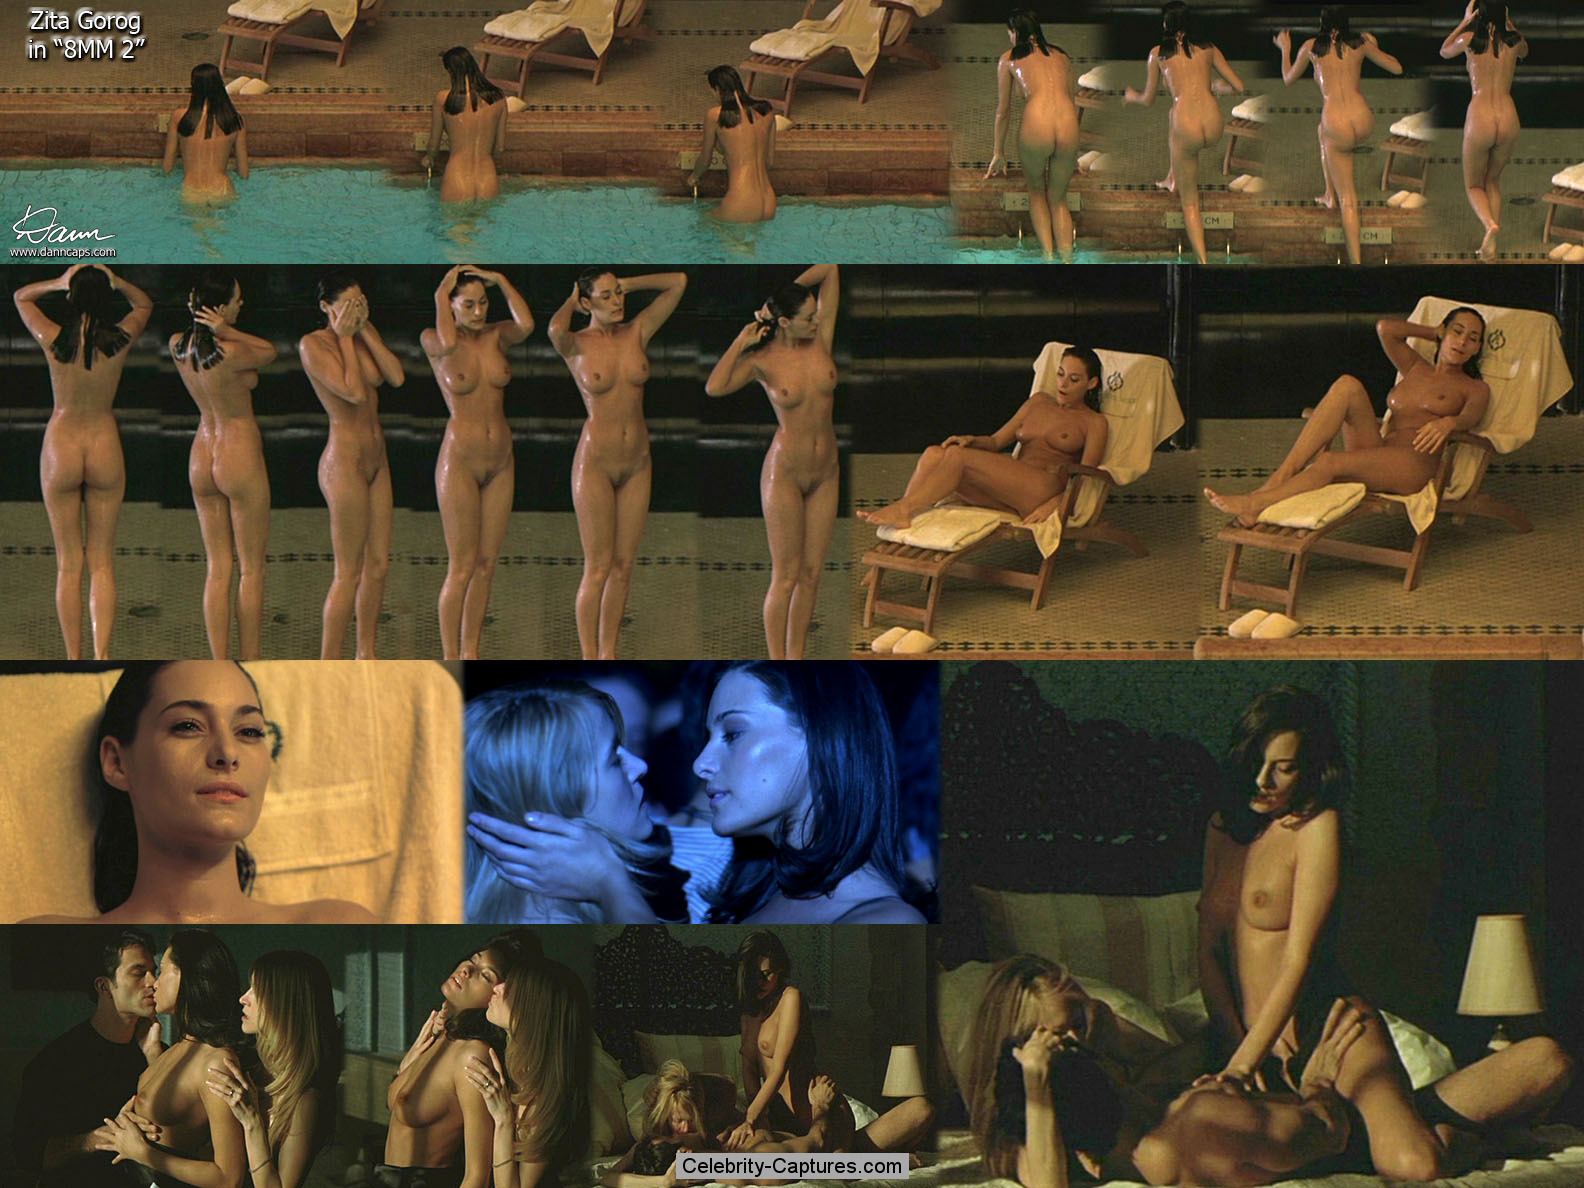 Zita Gorog nude in hot scenes from movies.